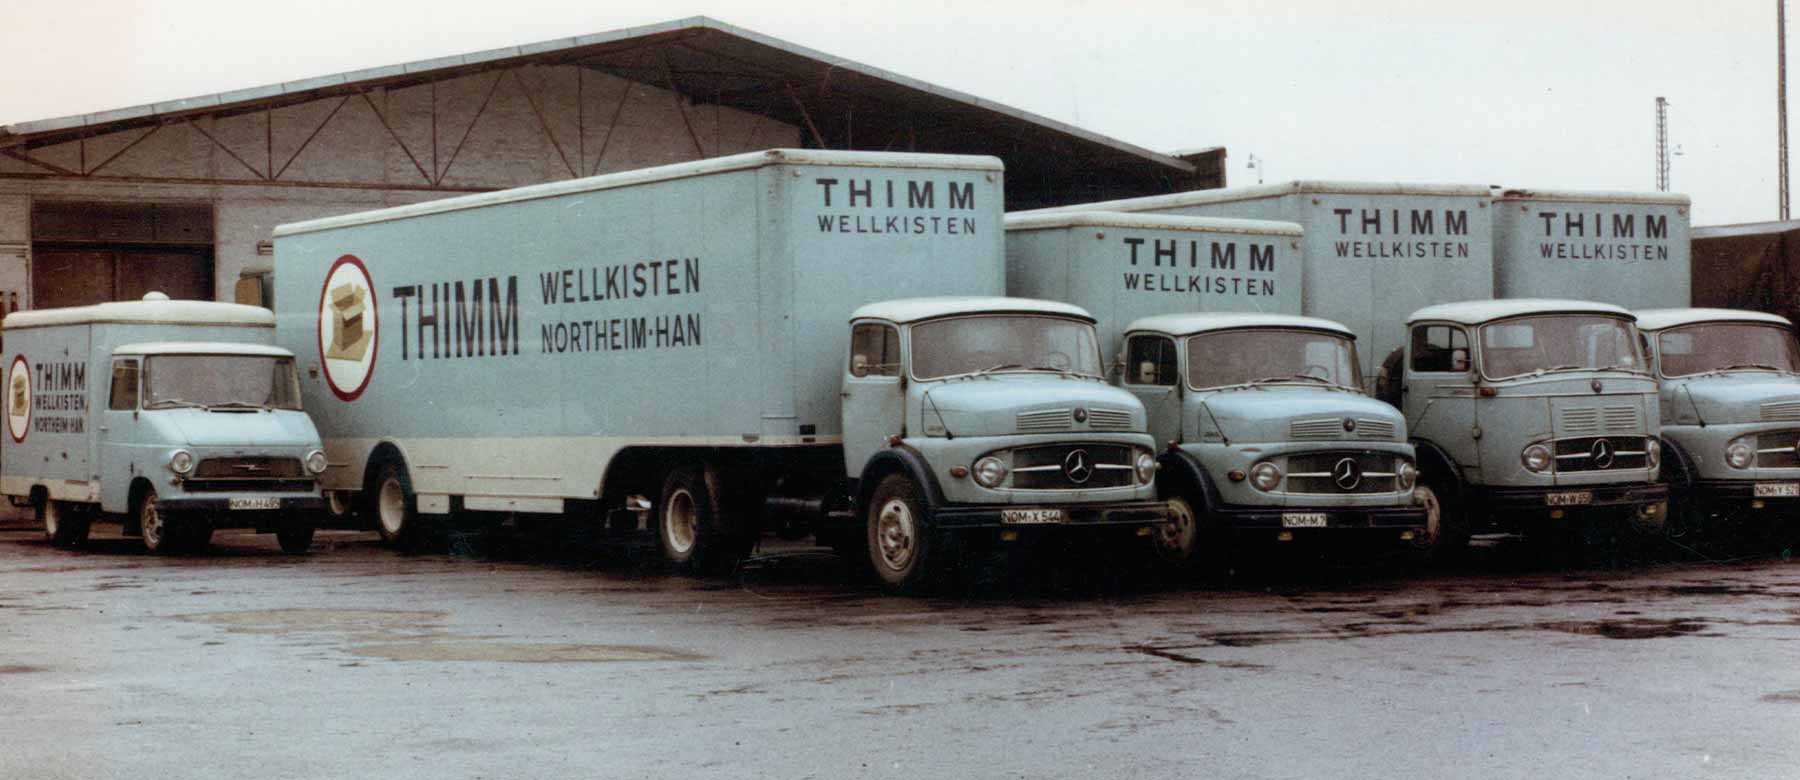 The company history of THIMM